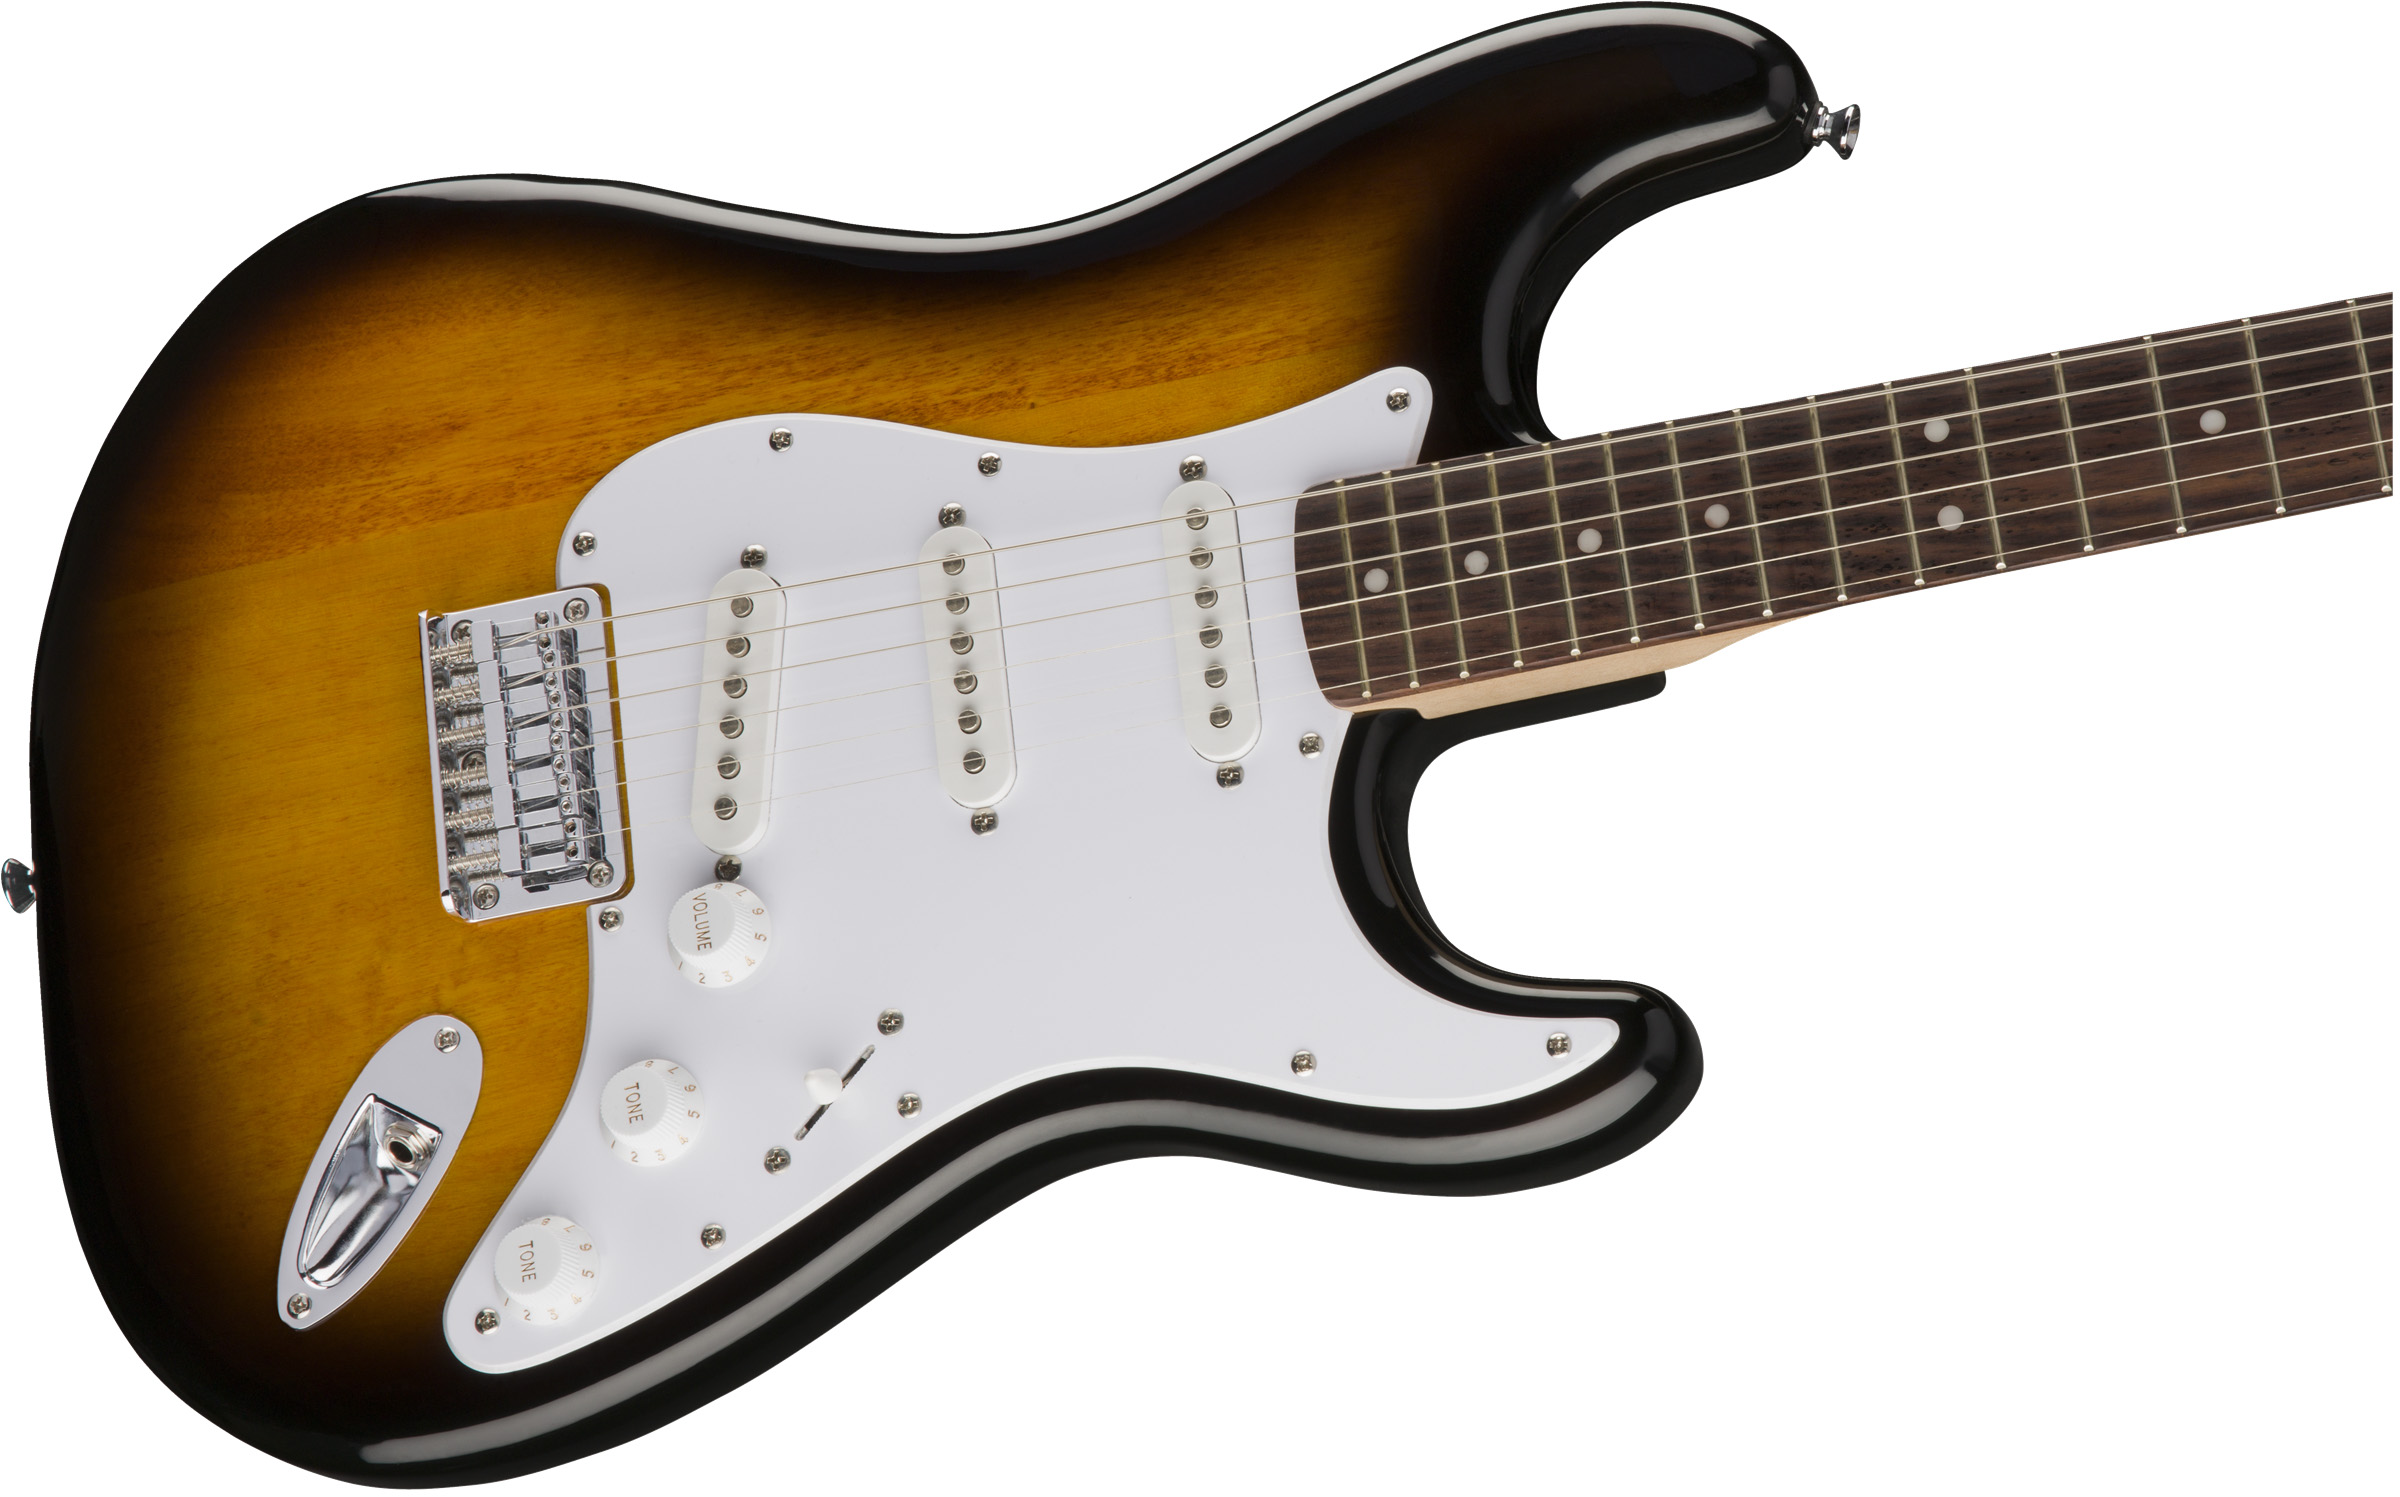 Bullet stratocaster hss. Электрогитара Fender Player Stratocaster HSS. Электрогитарас fenser Square. Электрогитара Fender '60 Stratocaster. Электрогитара Squier Vintage modified Stratocaster HSS.